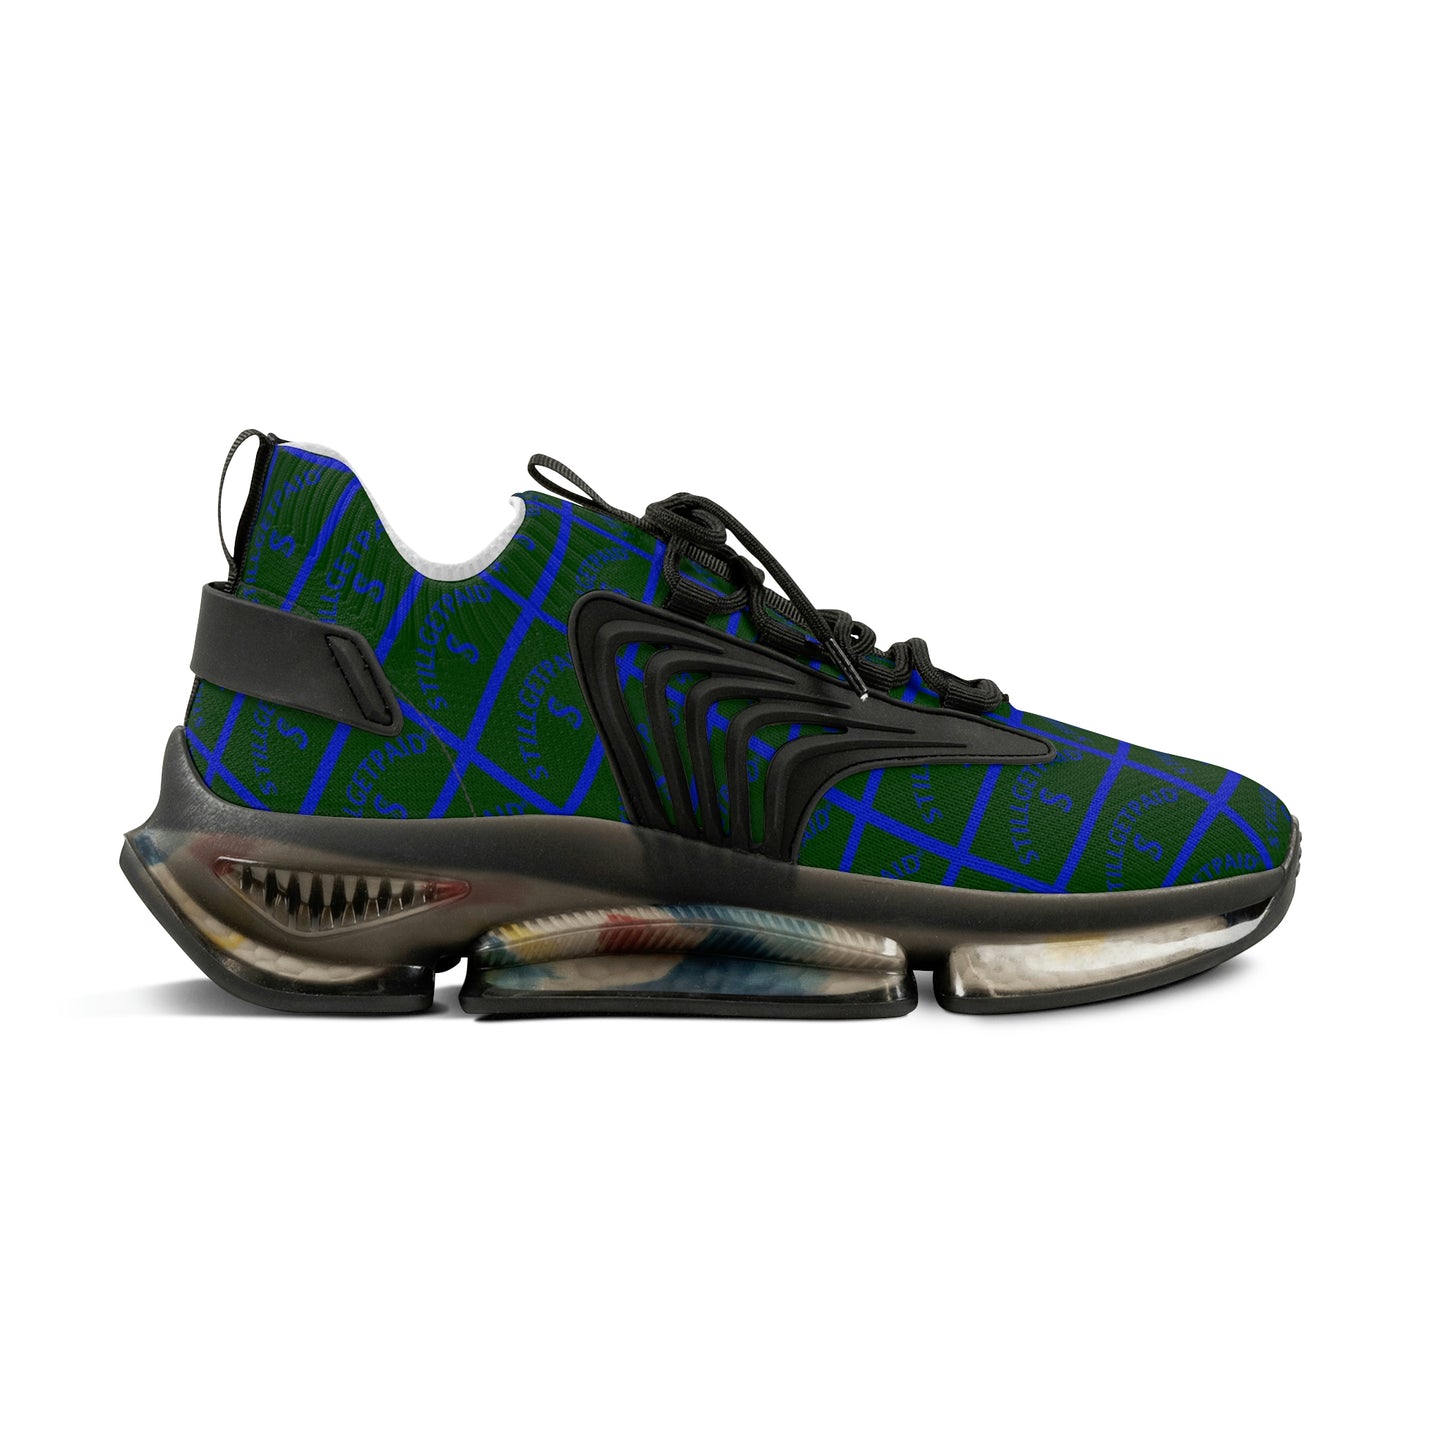 STILLGETPAID® APPAREL  BLUE GREEN Men's Mesh Sneakers